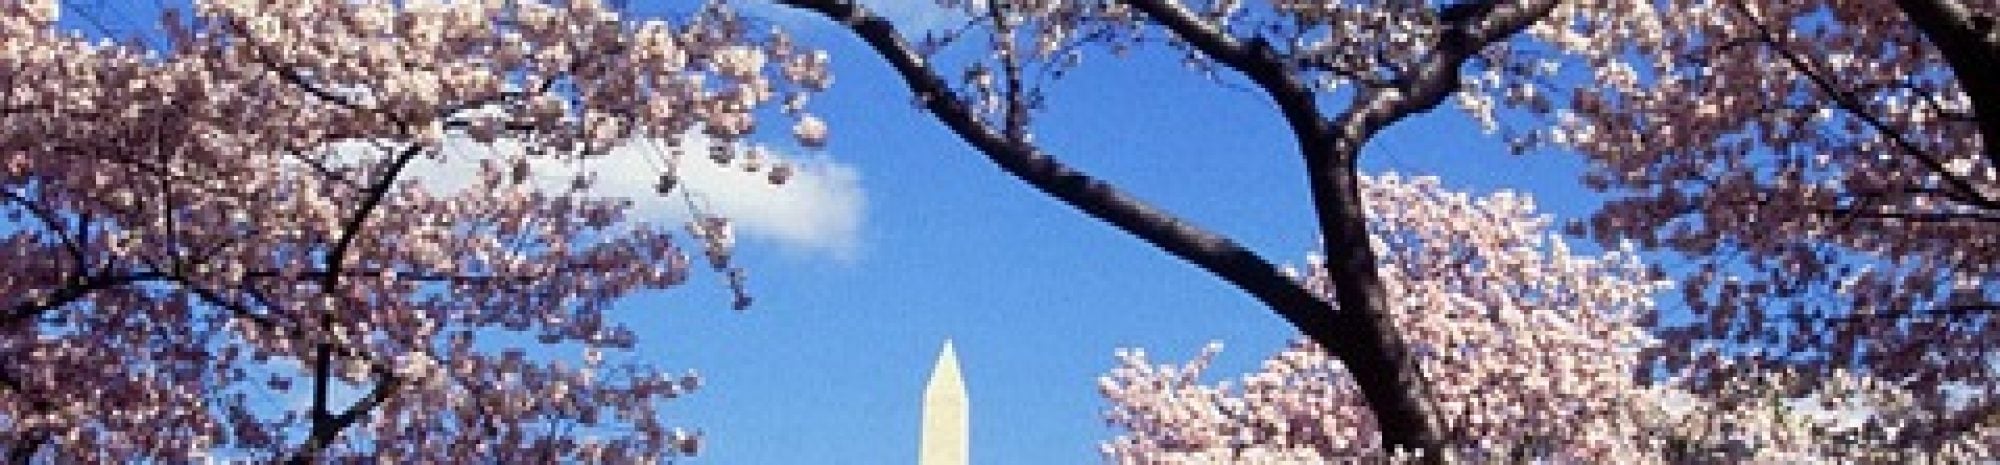 Washington & ses cerisiers